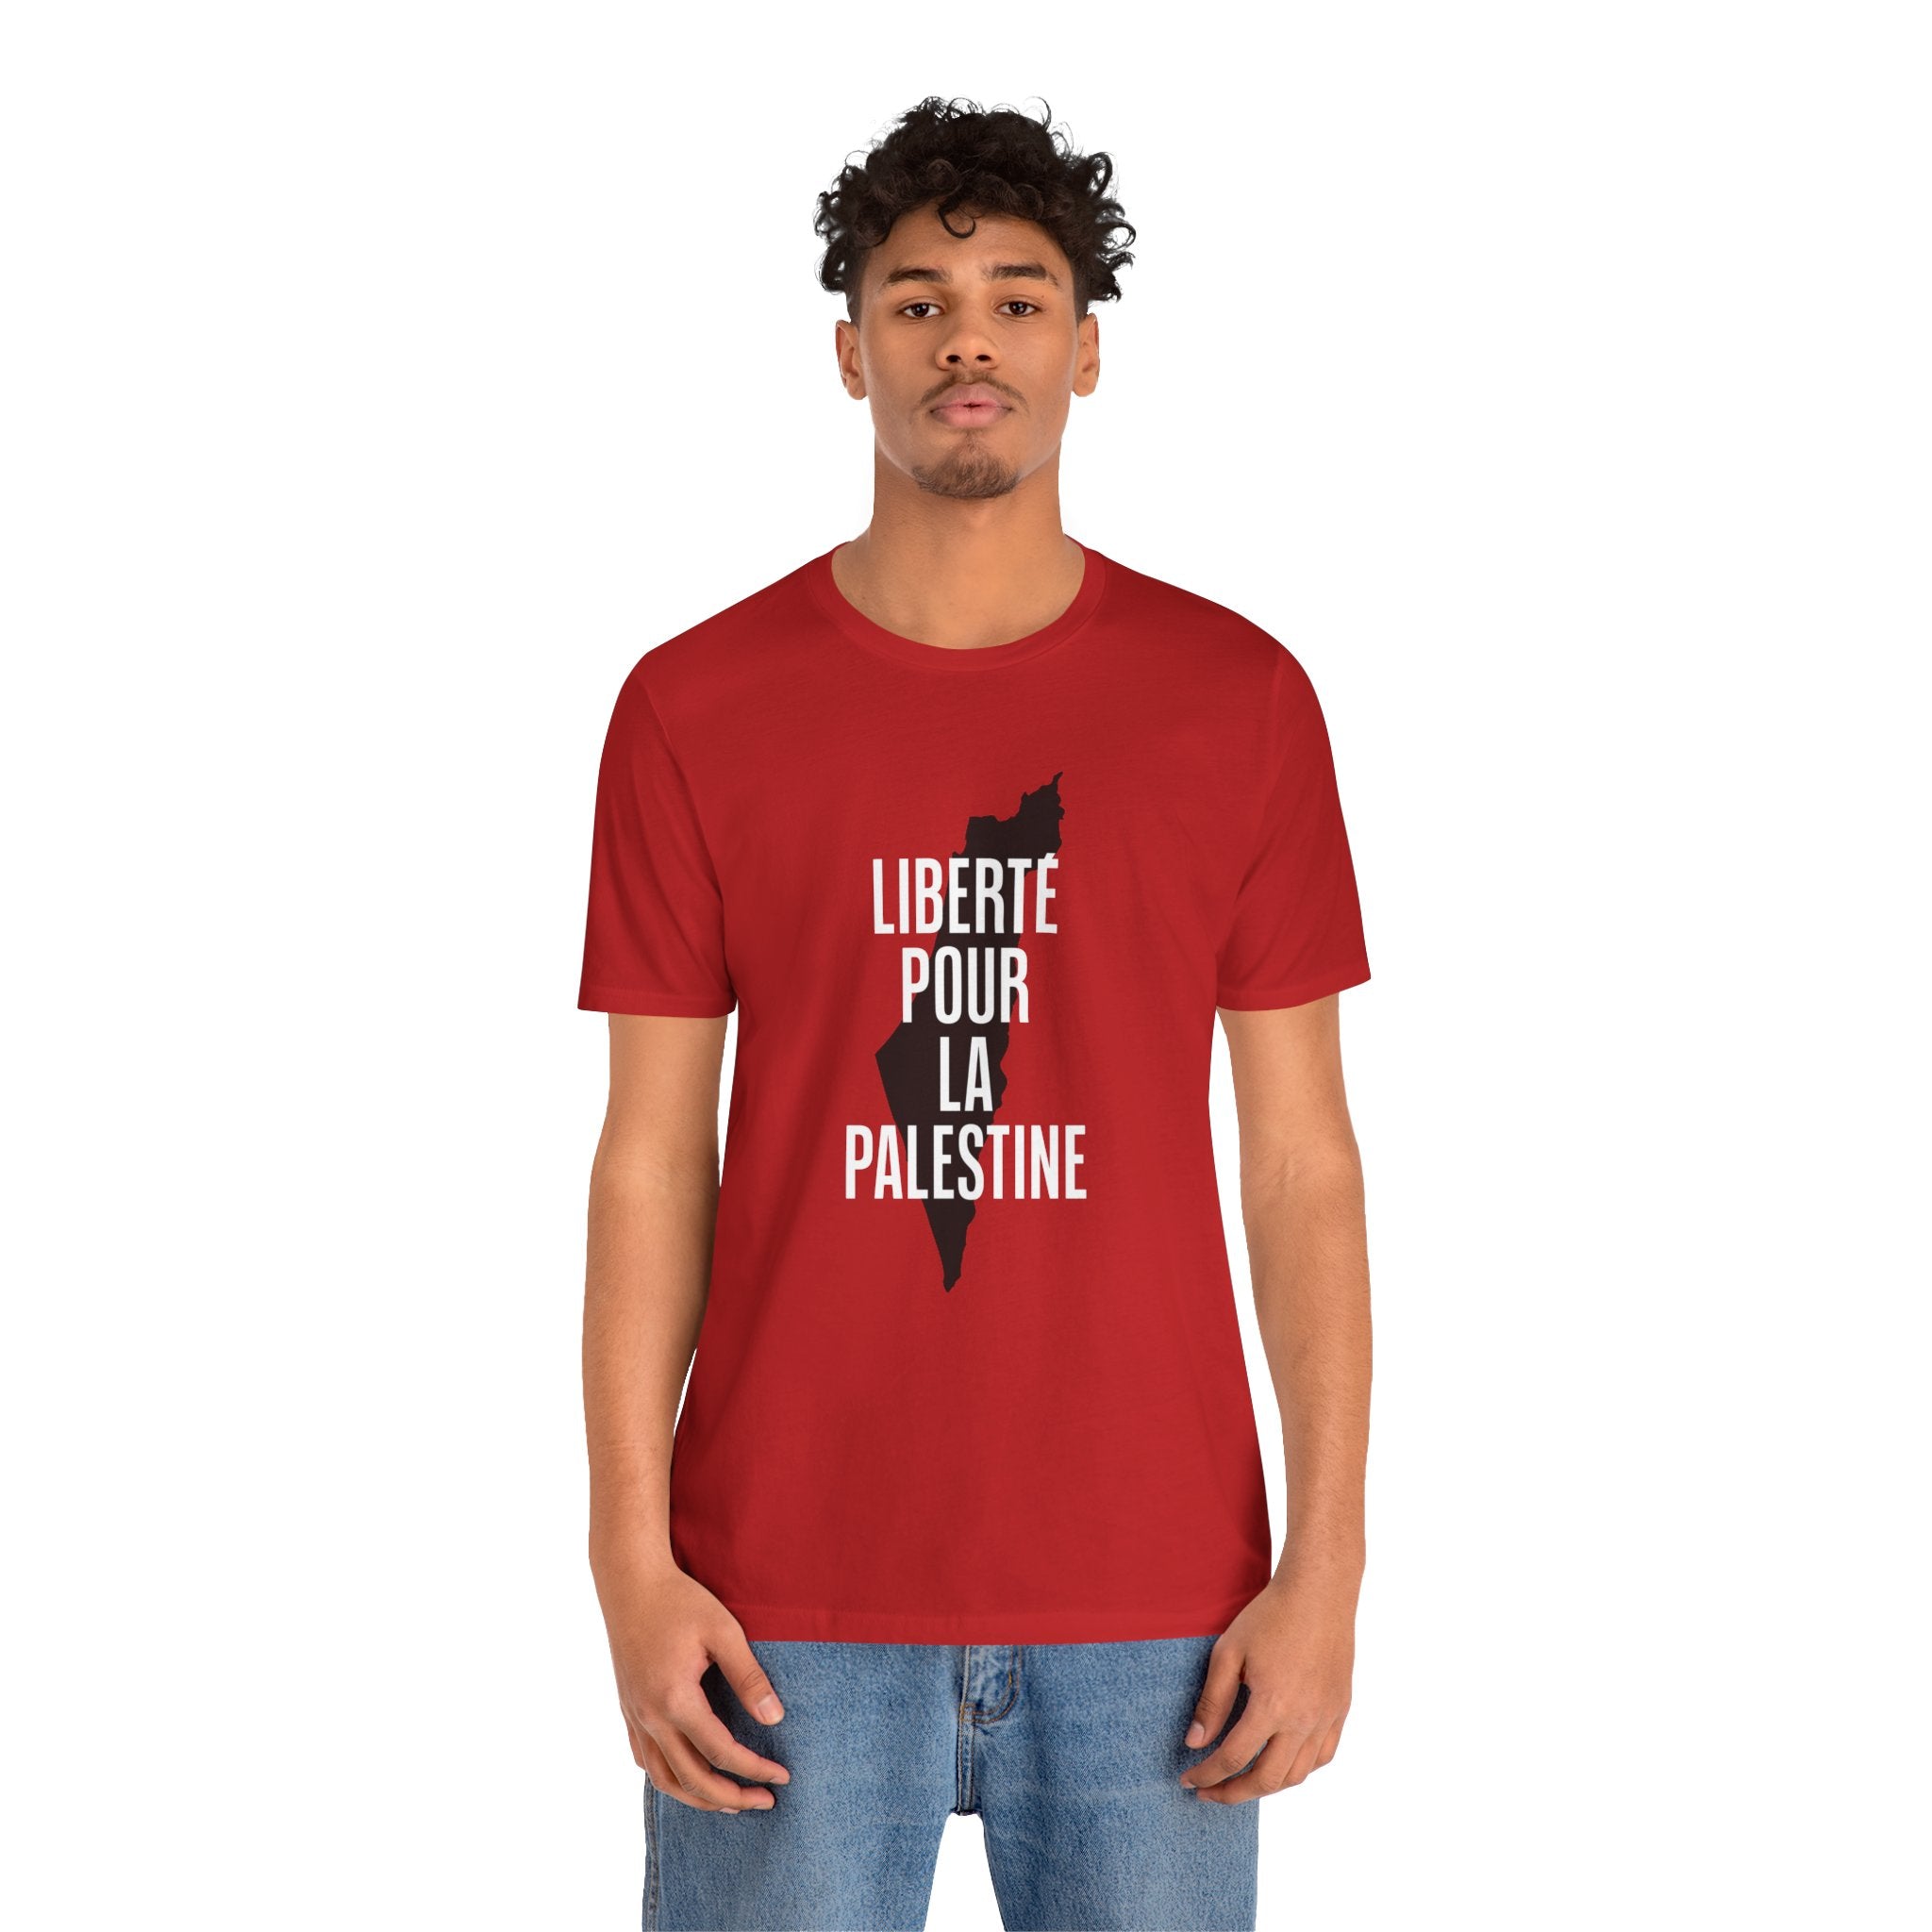 Liberté pour la Palestine